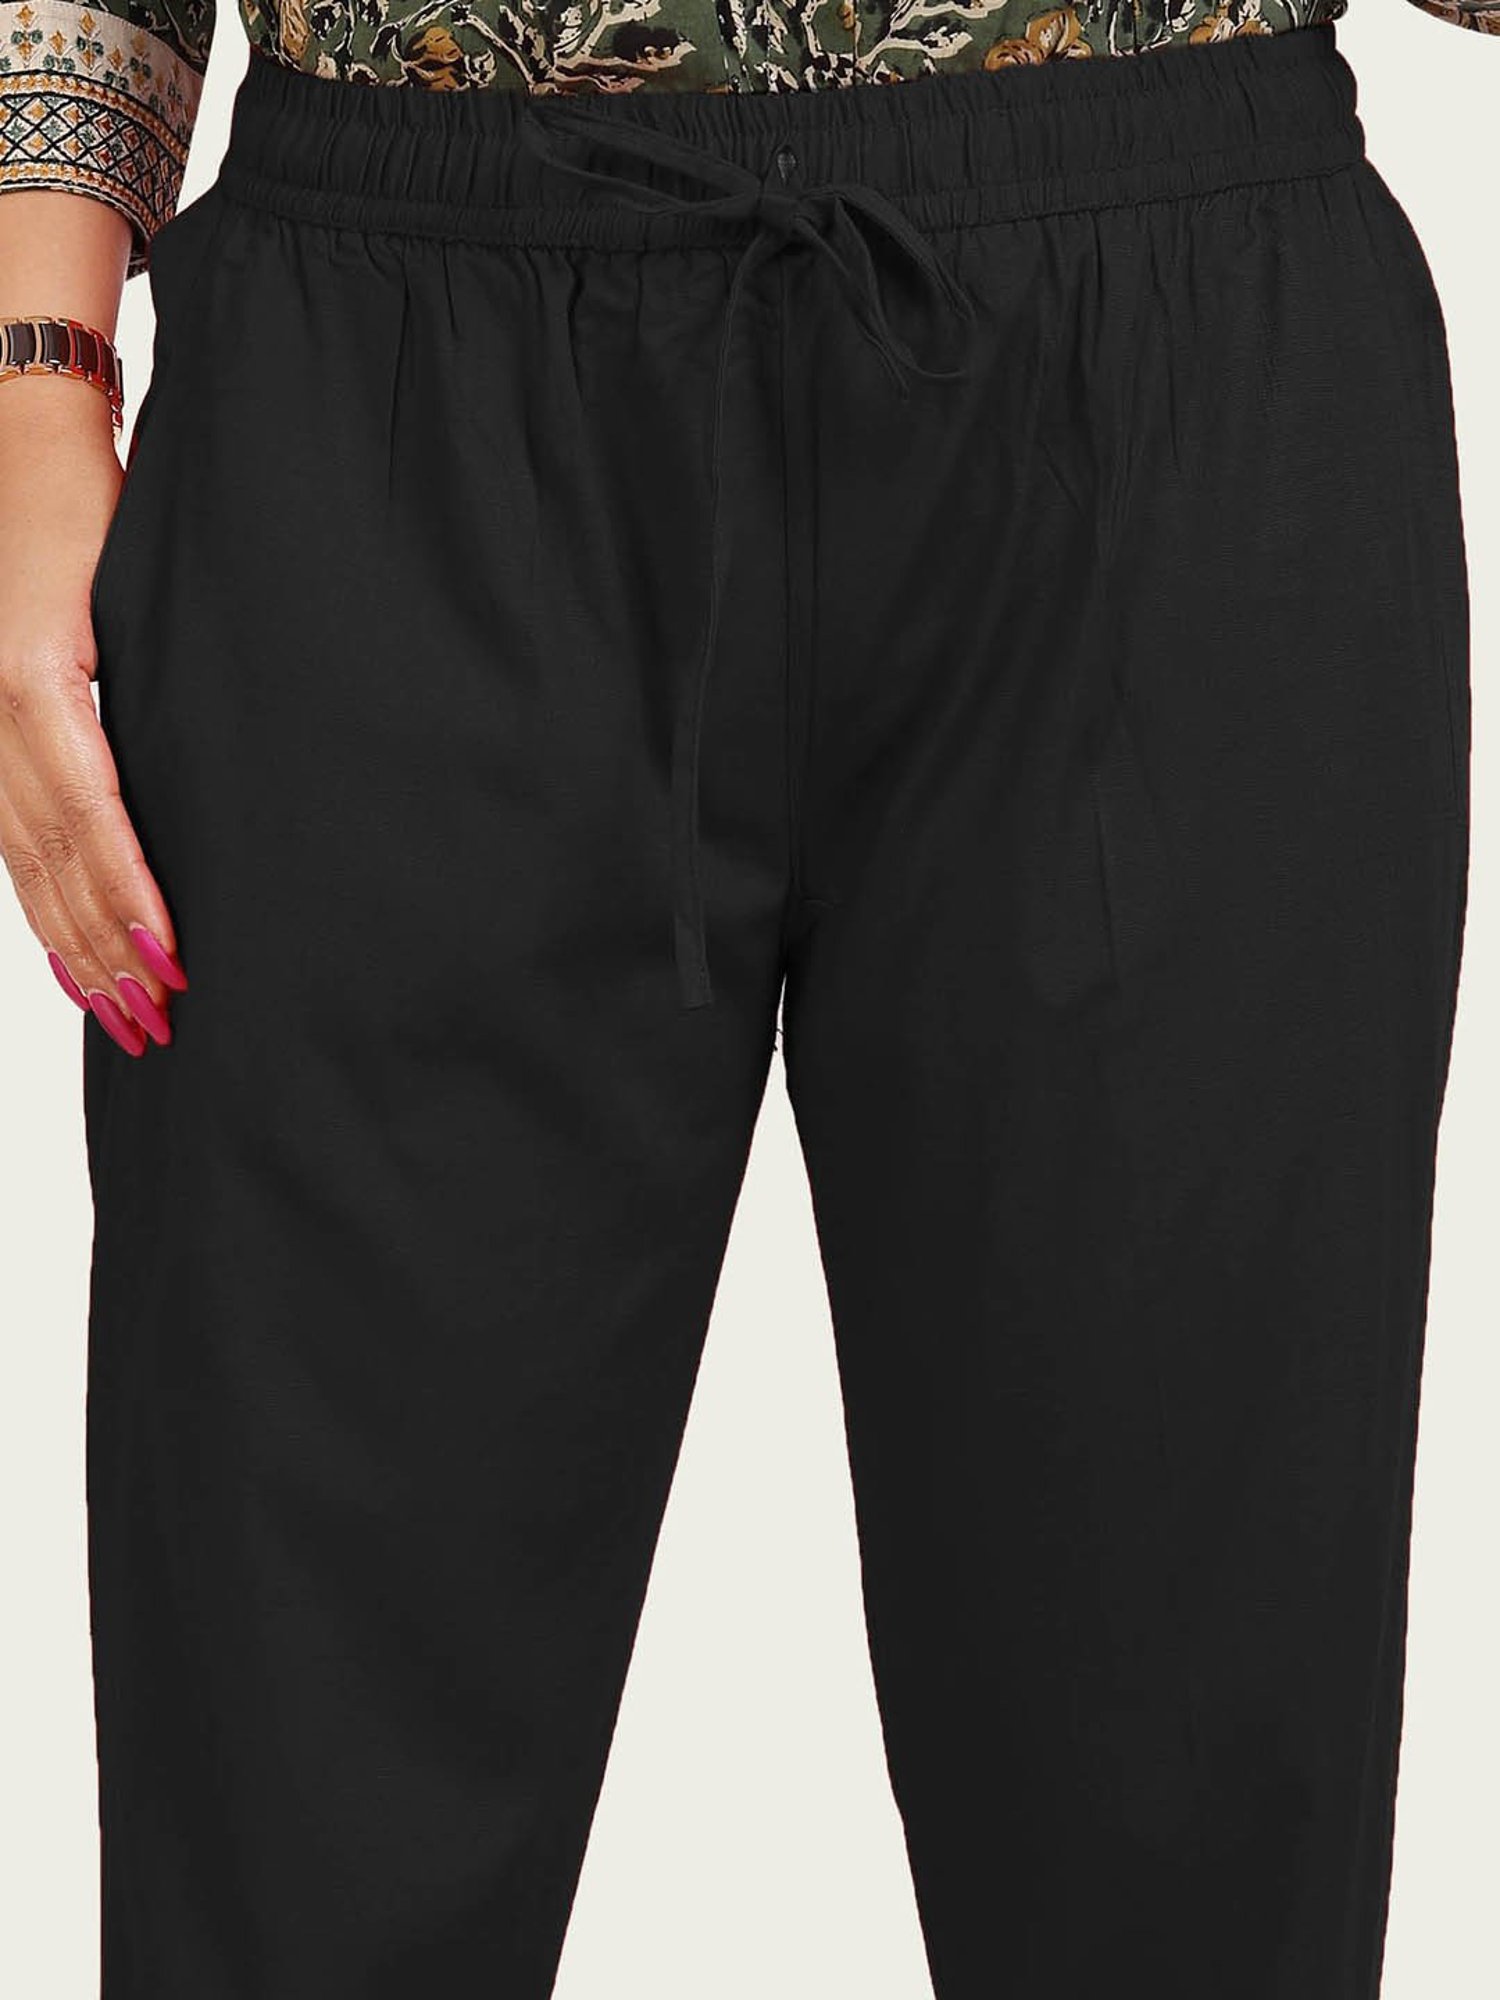 Buy Cotton Culture Black Pants for Women's Online @ Tata CLiQ